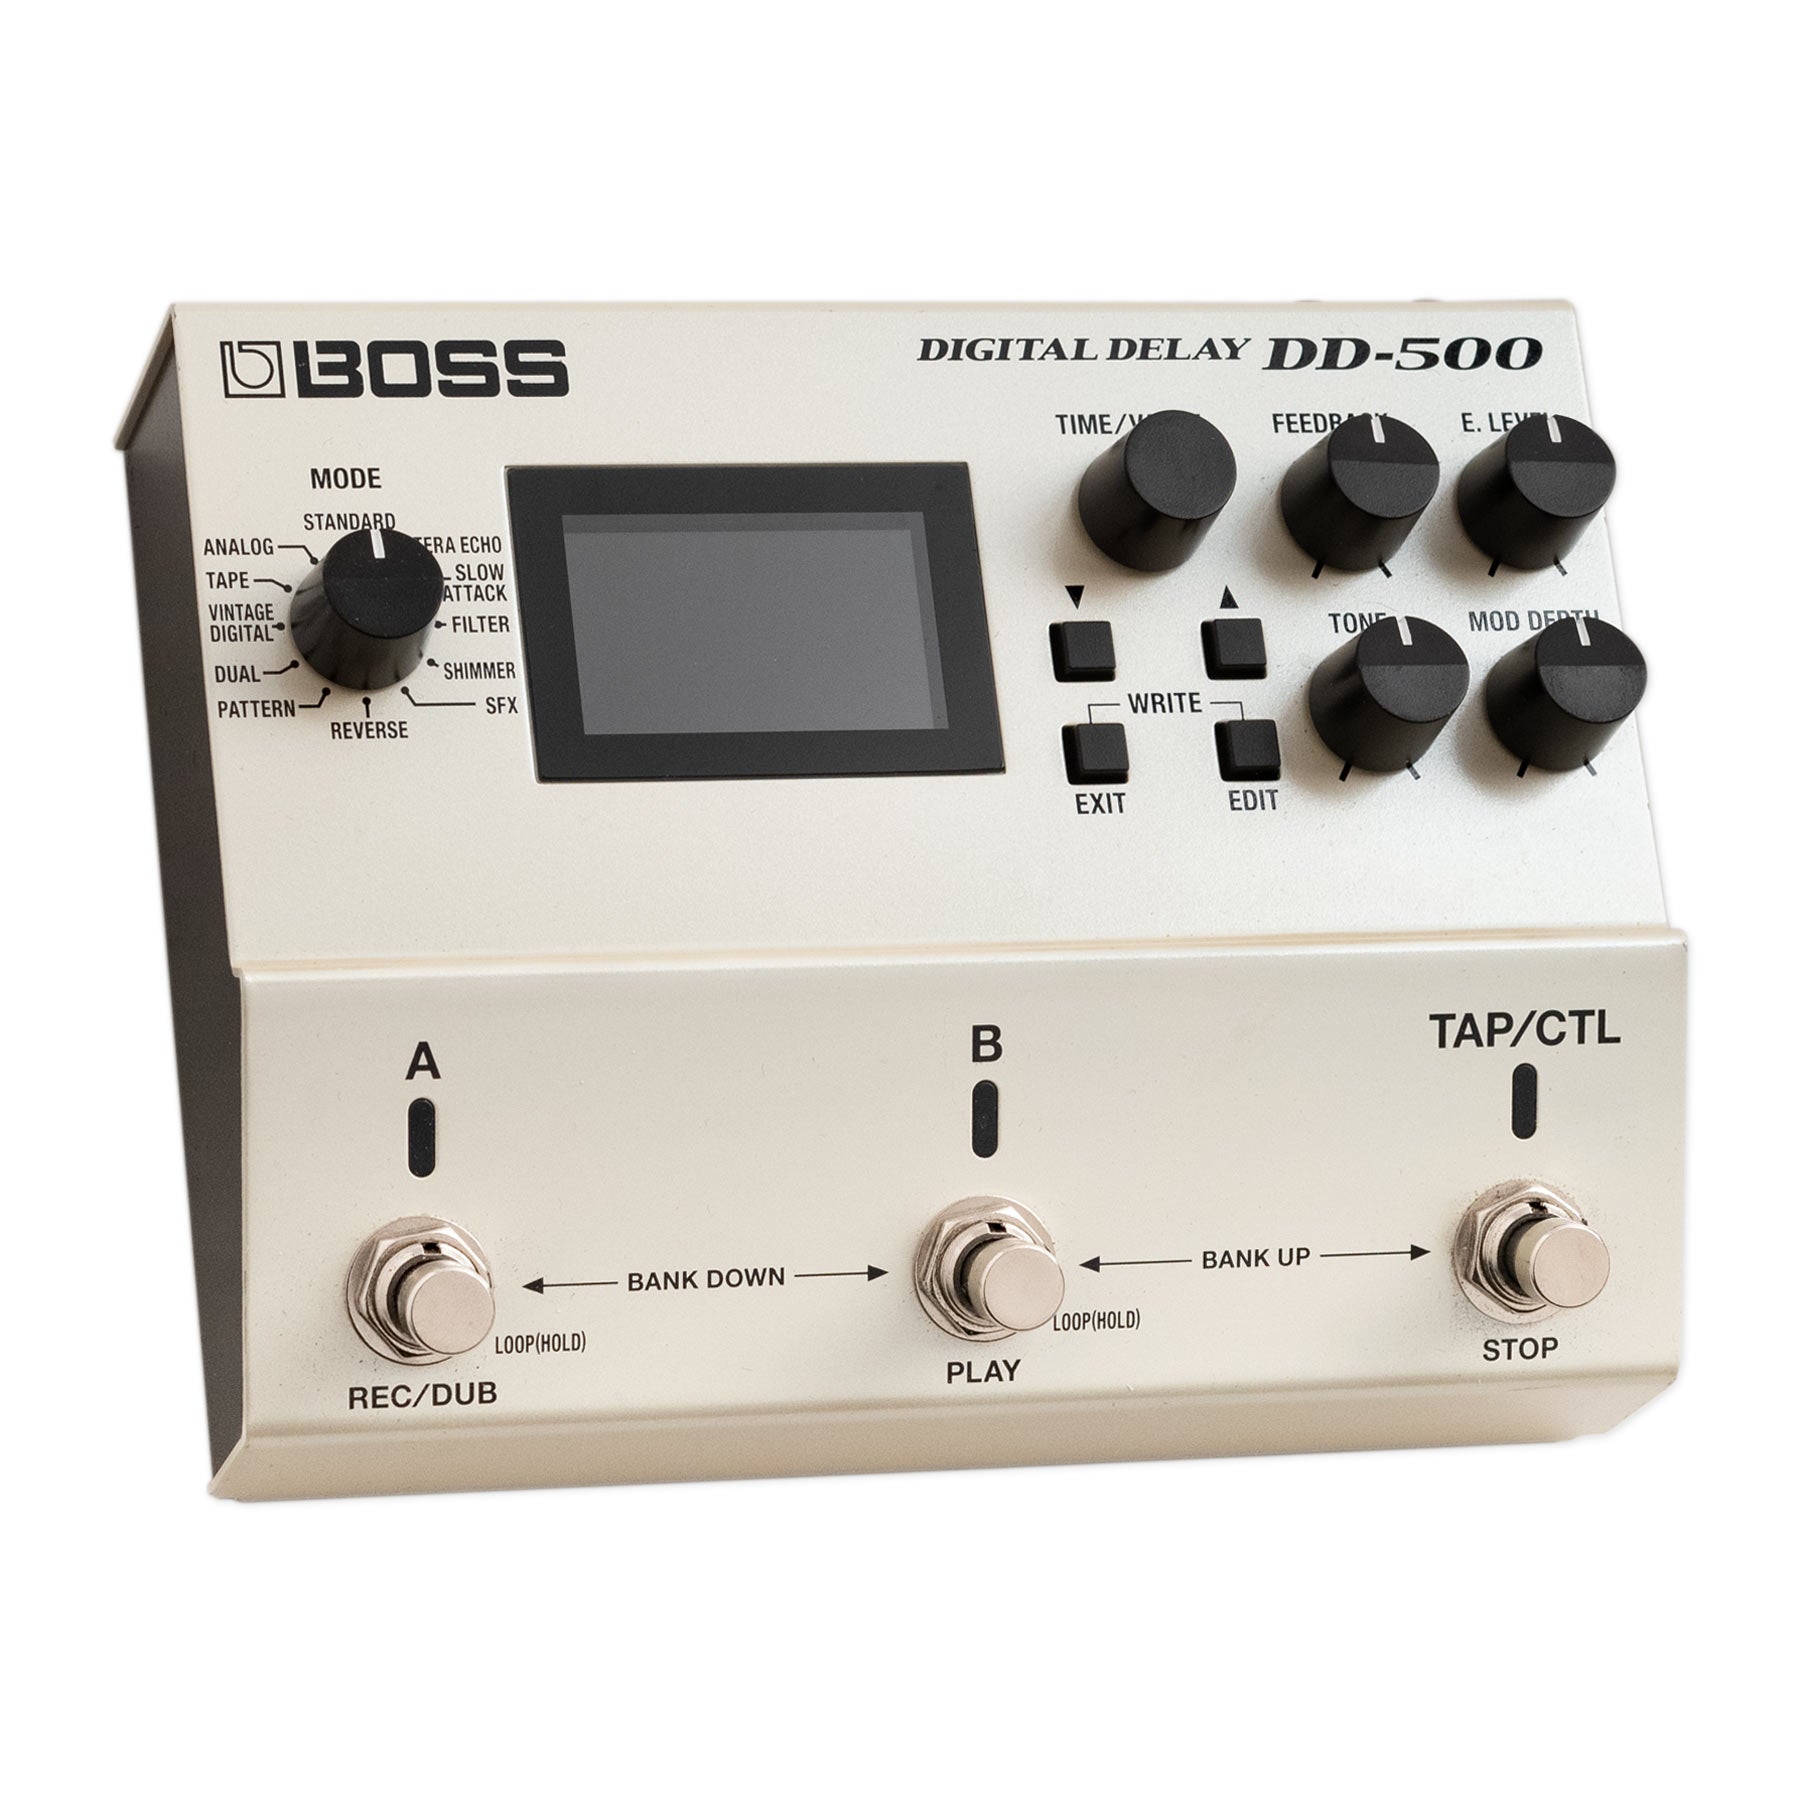 USED BOSS DD-500 DIGITAL DELAY